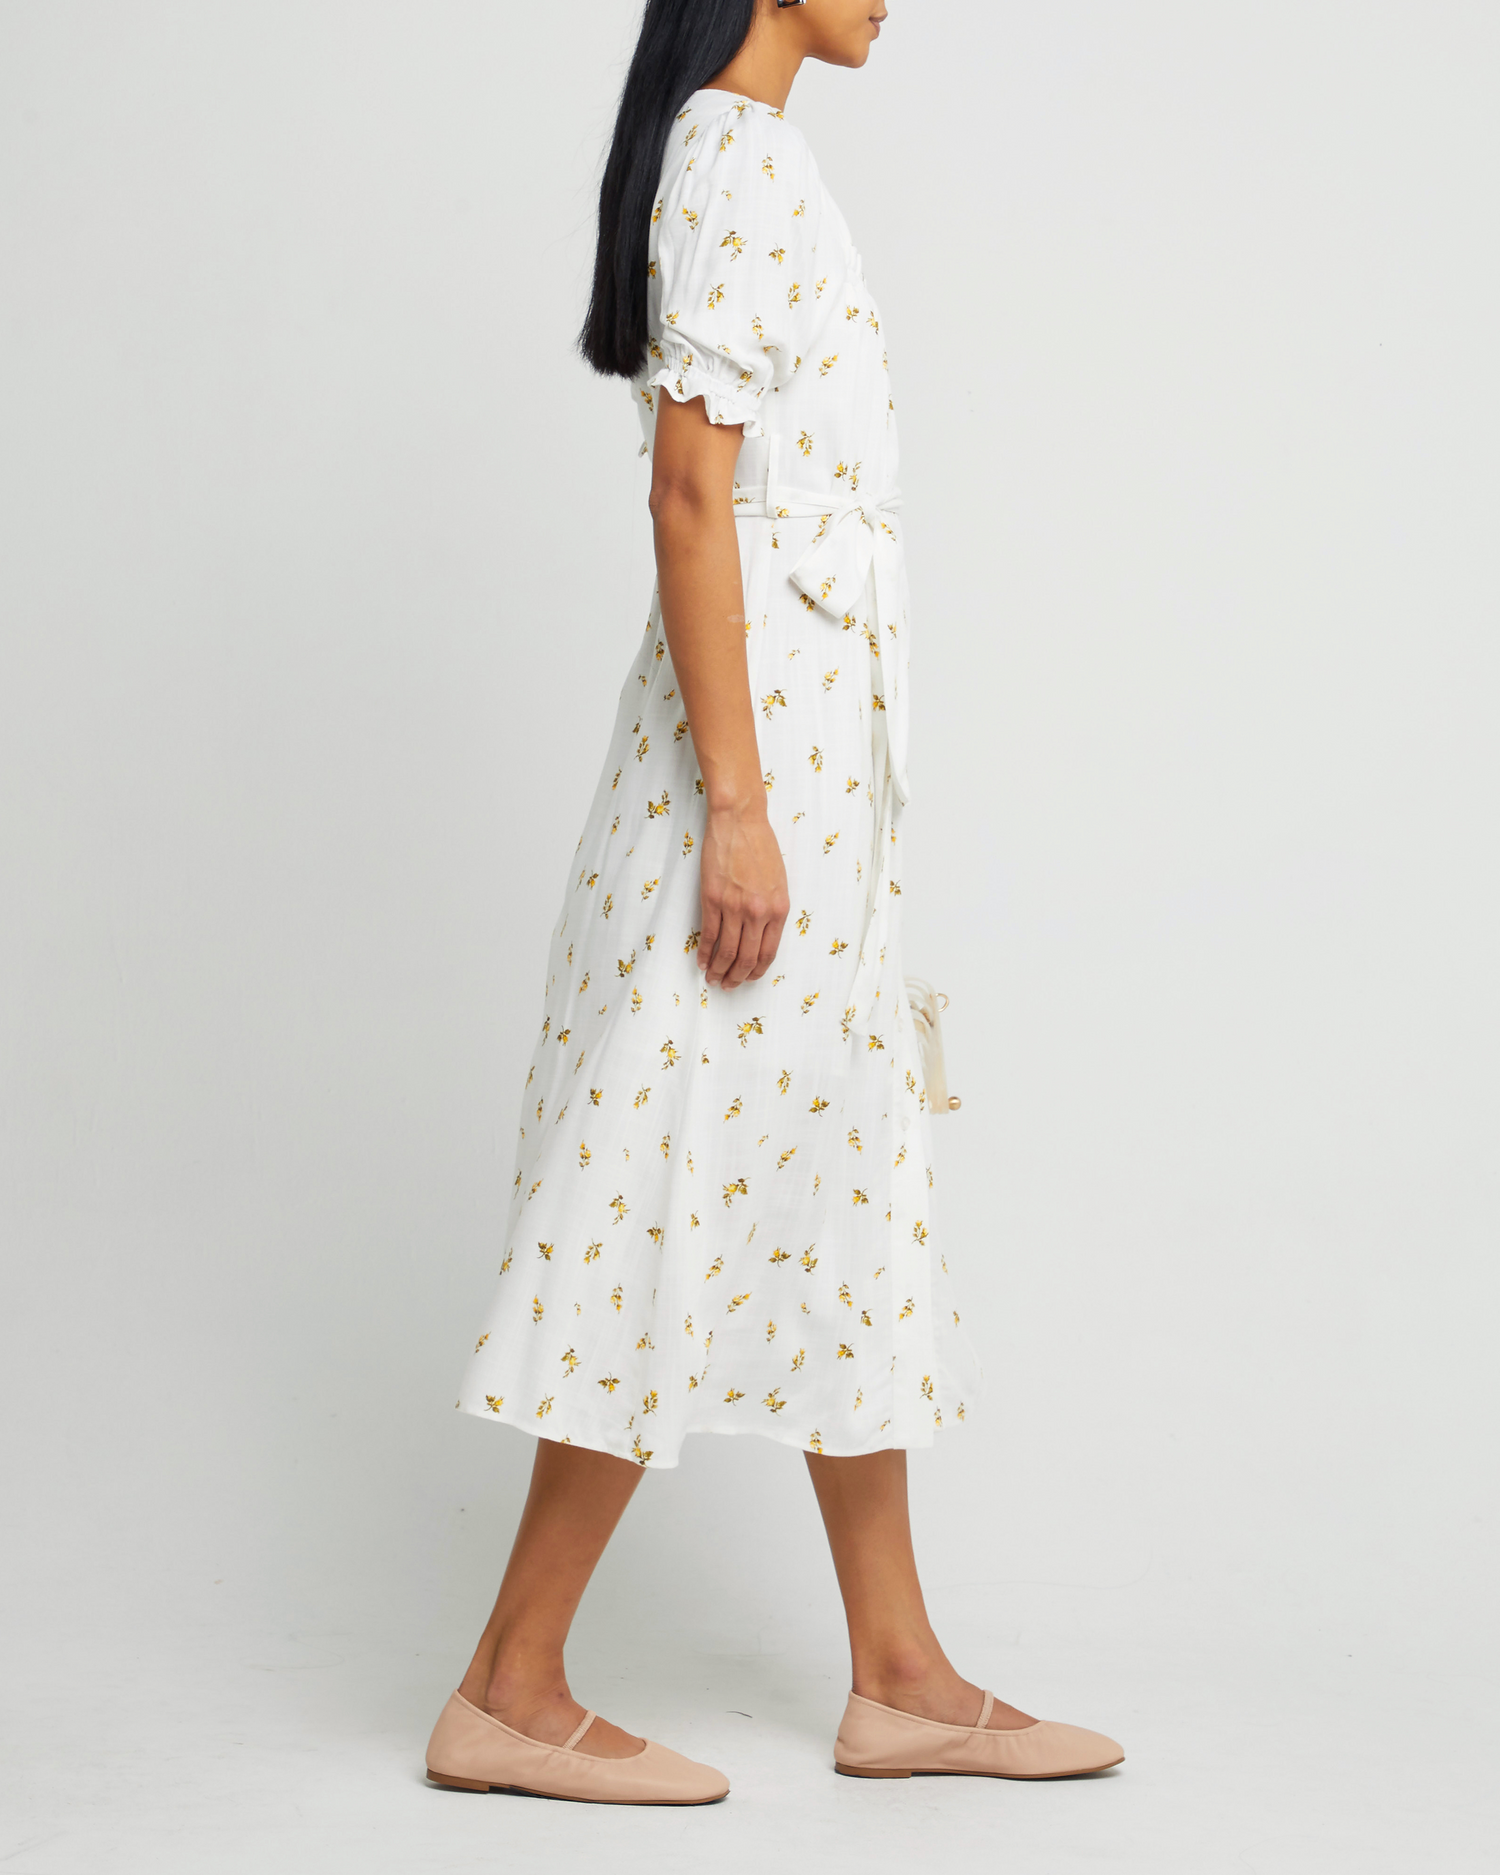 Third image of Juni Dress, a white maxi dress, short sleeve, waist tie, white print